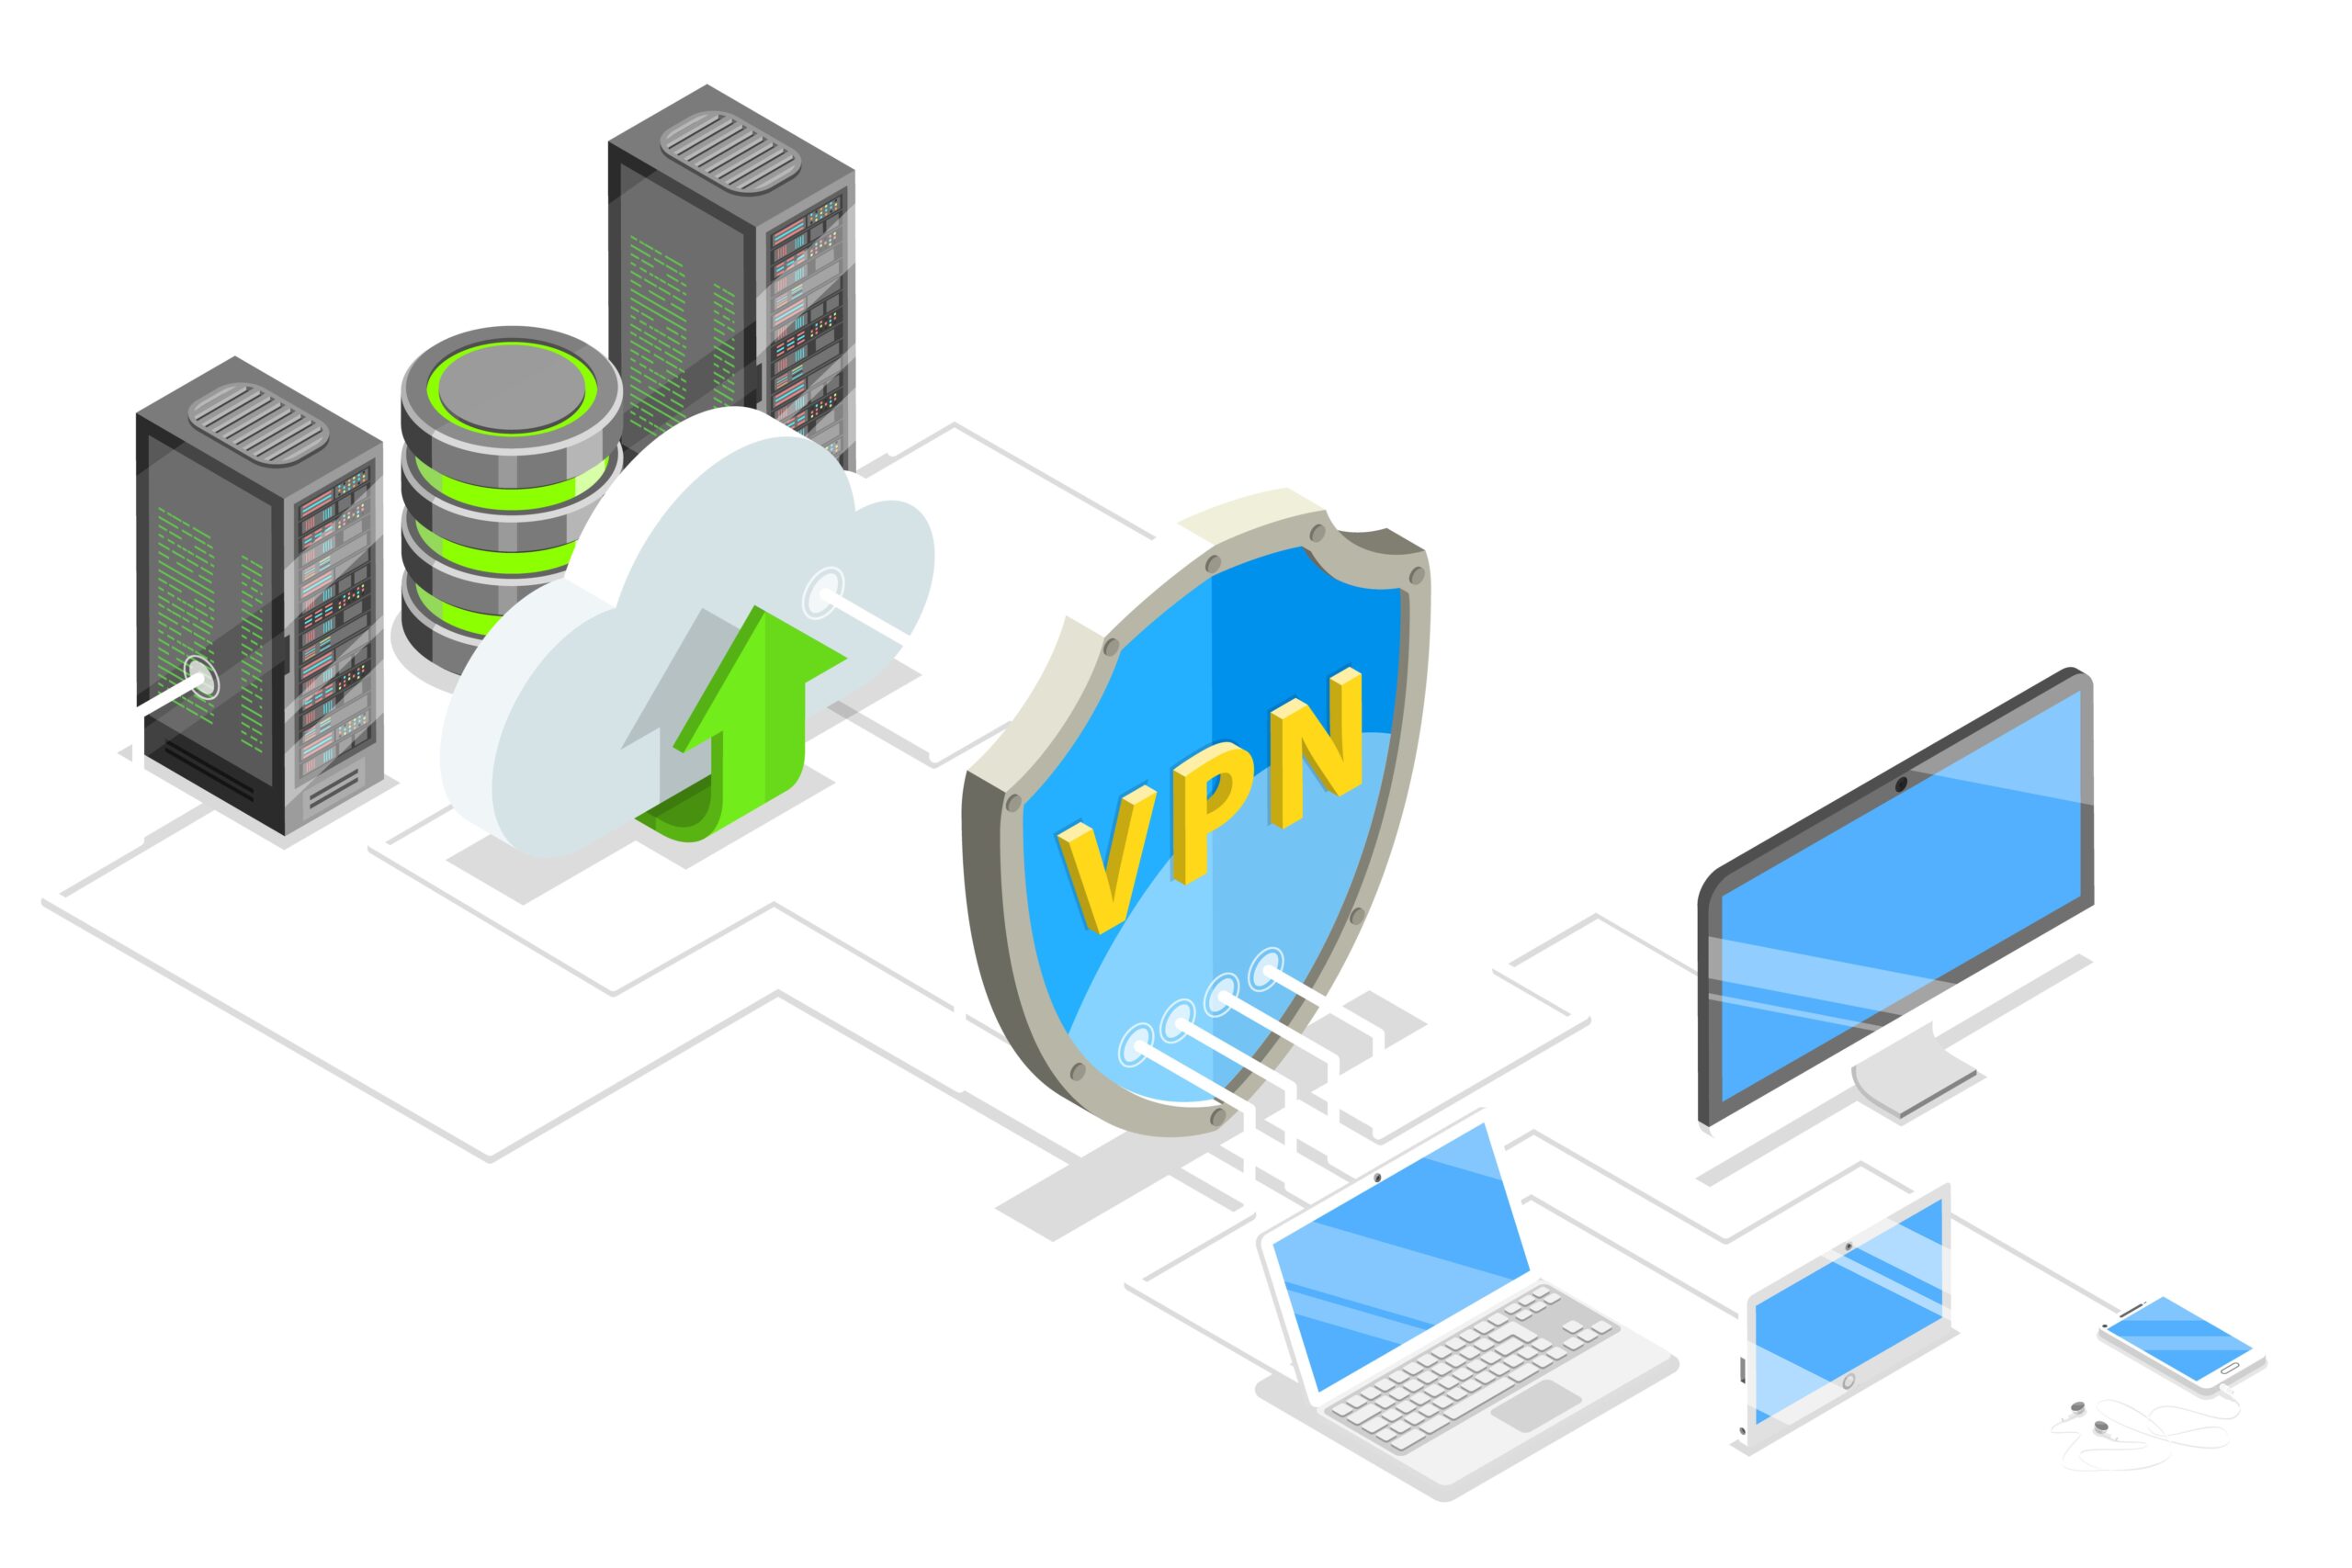 Network Access, Remote Access, SSl, VPN, SDP